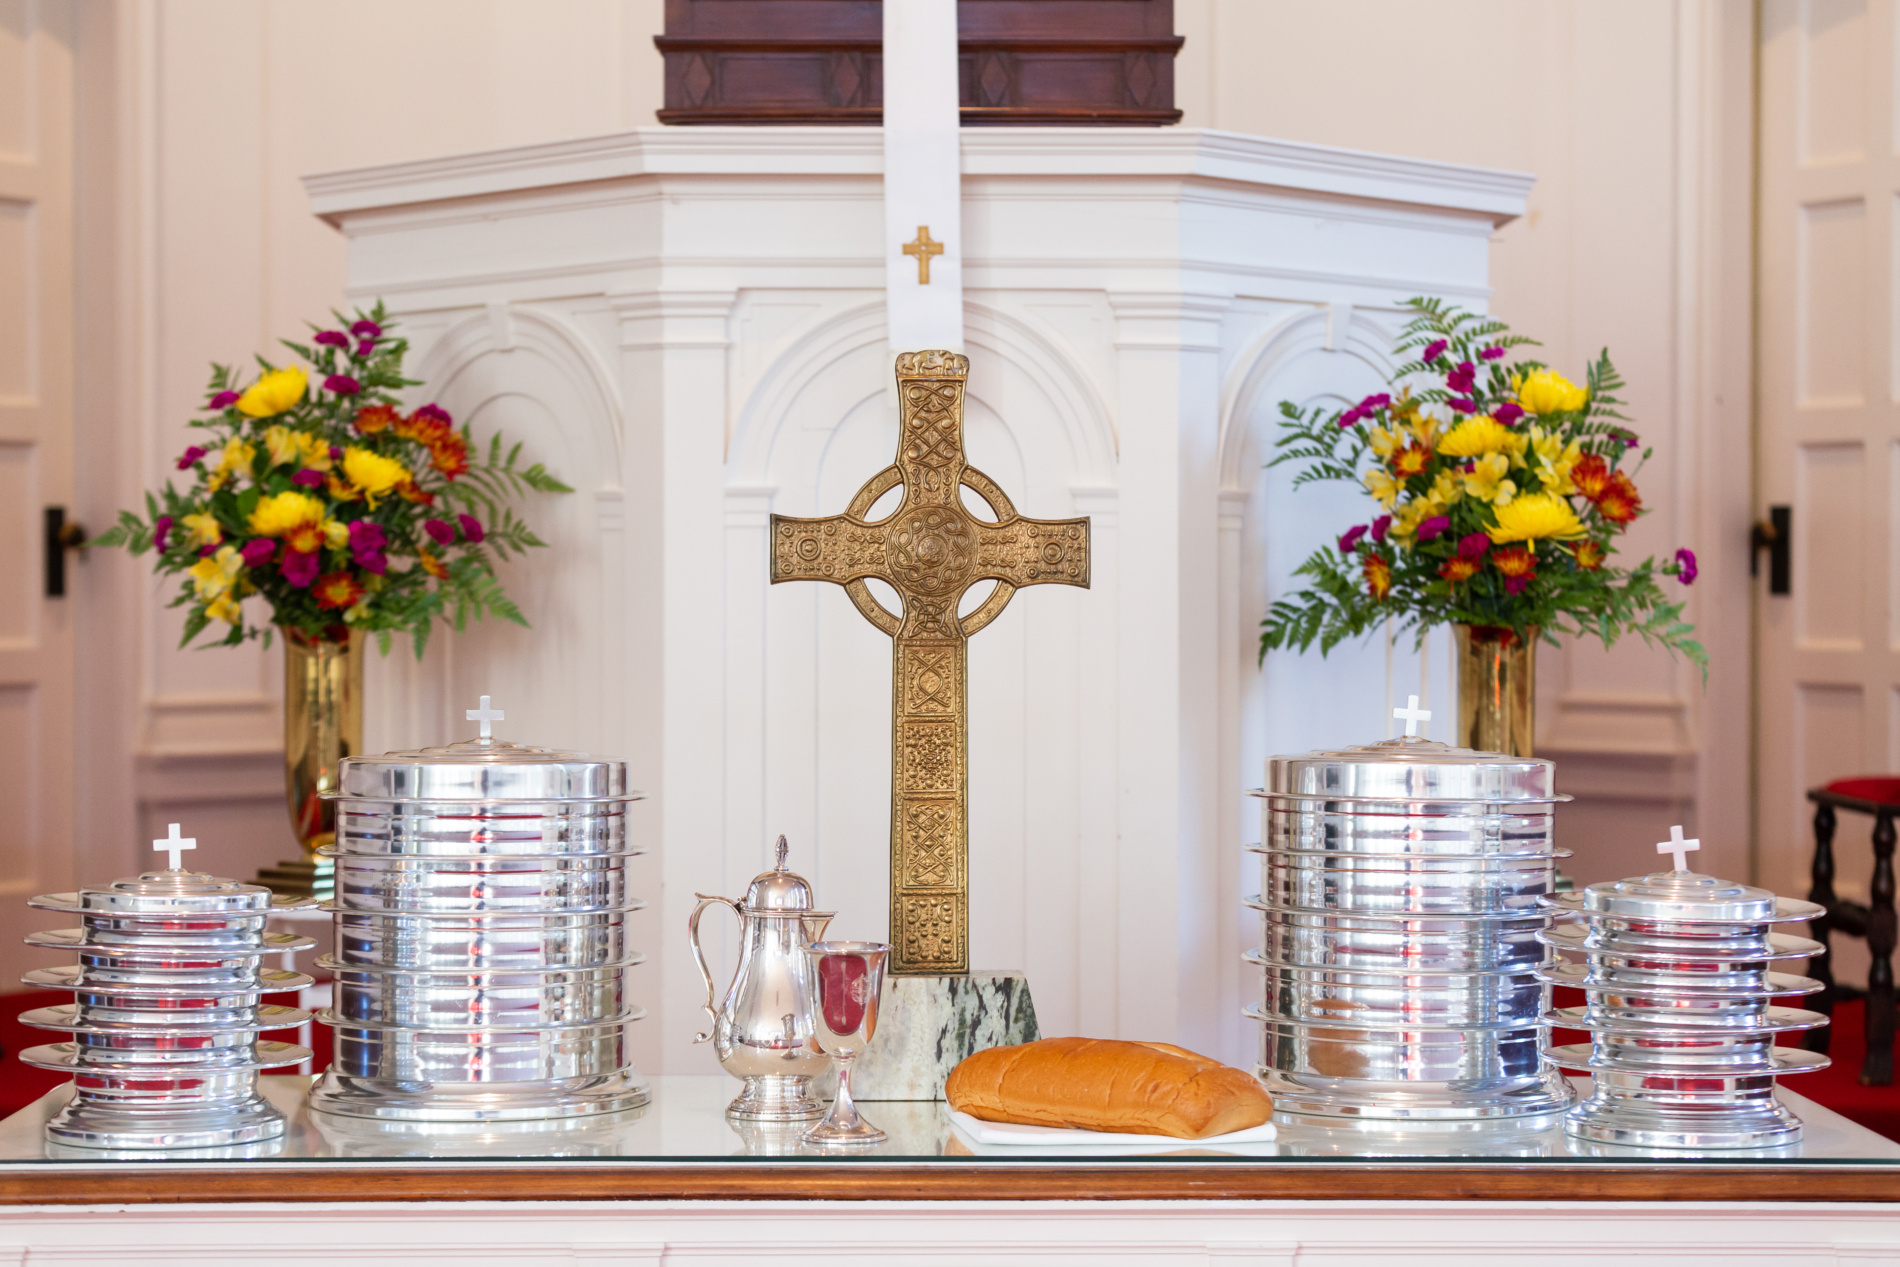 Flower arrangements and Communion trays